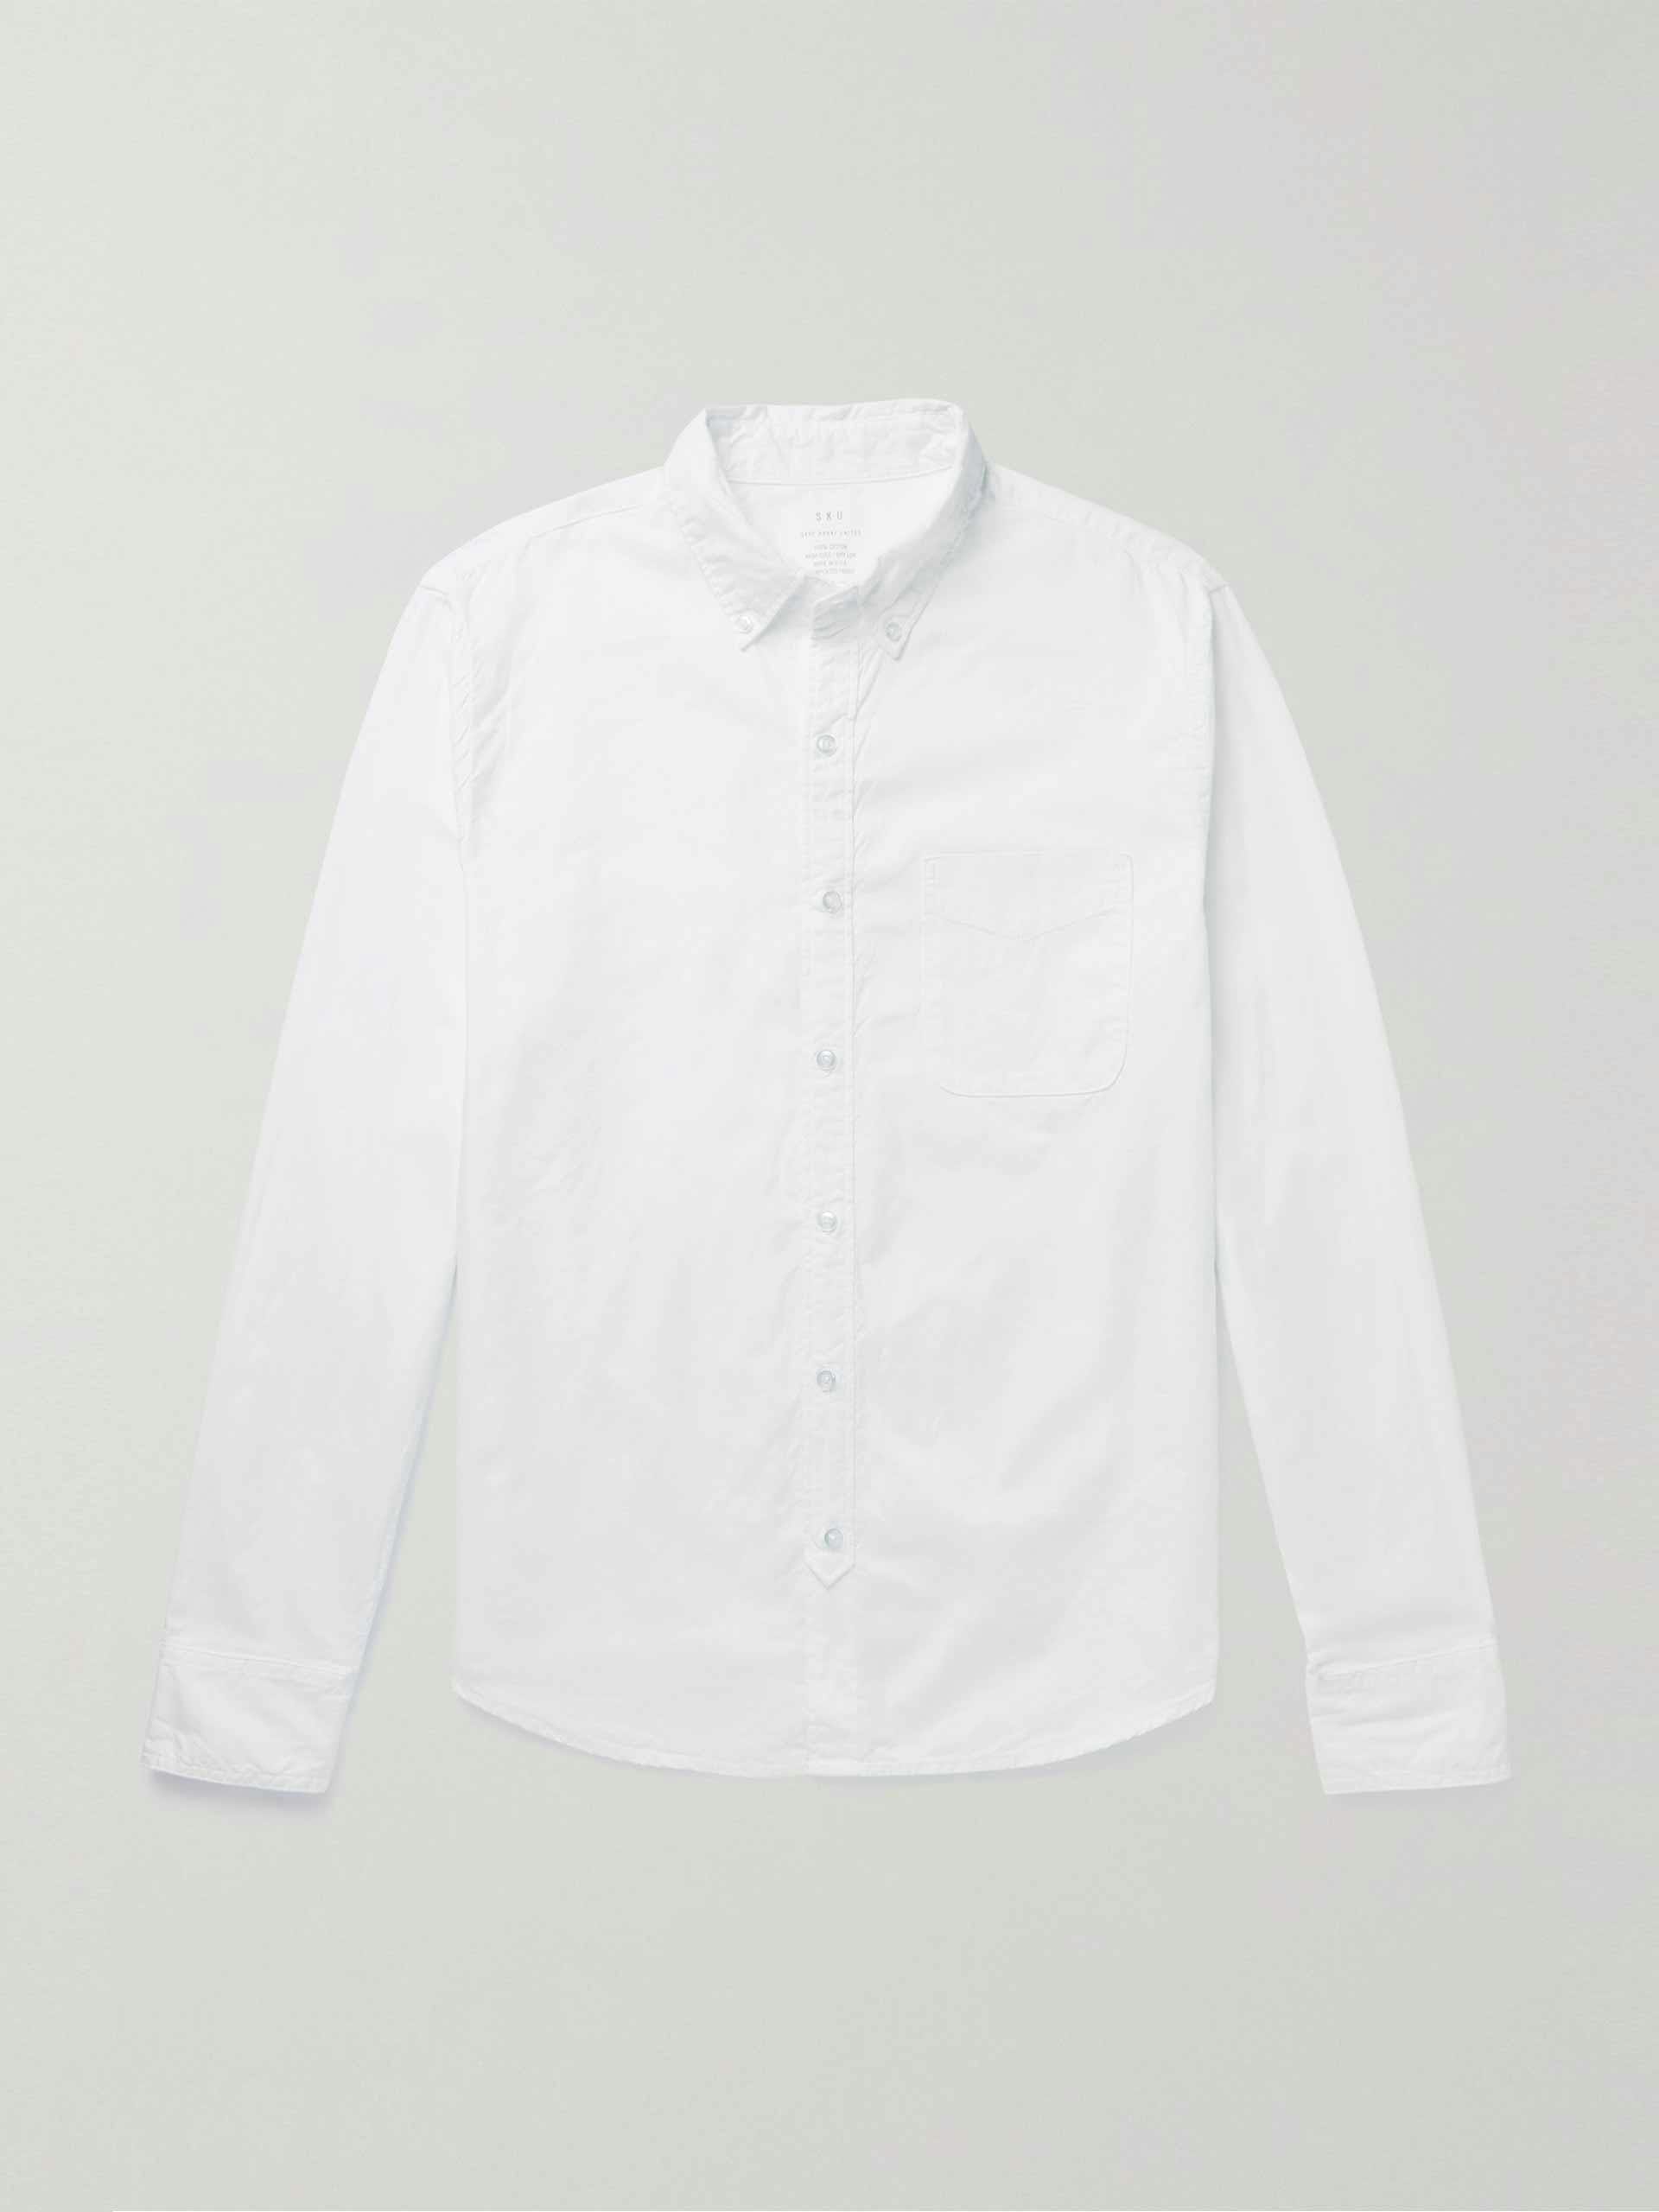 Button-down white Oxford shirt